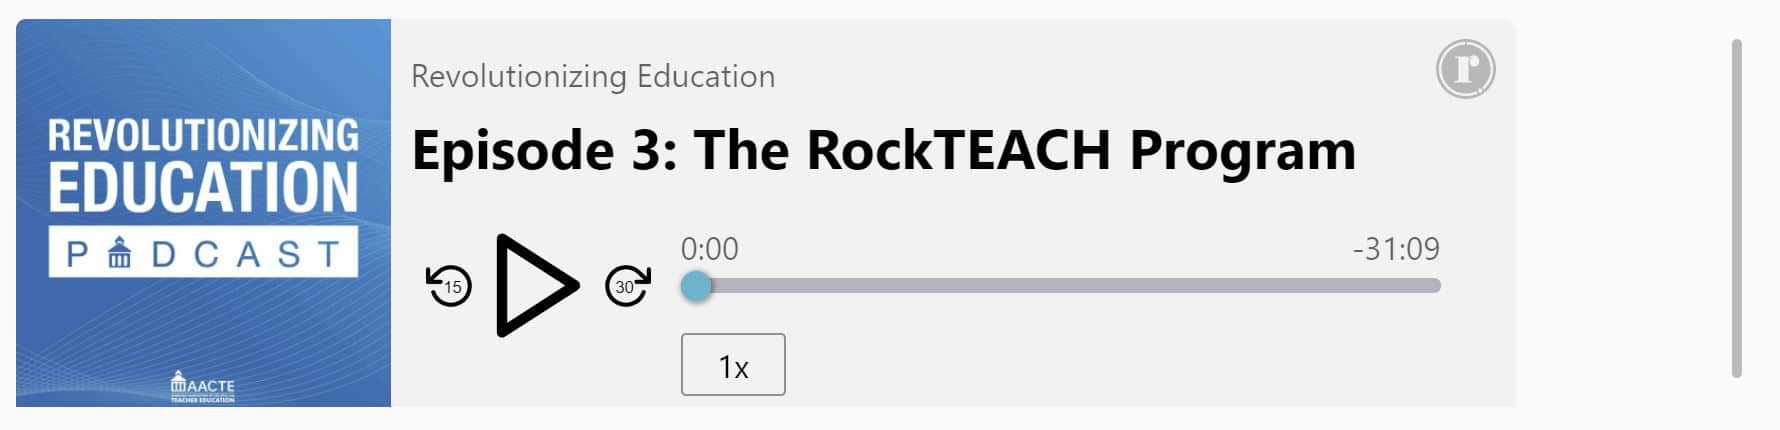 Episode 3: The RockTEACH Program